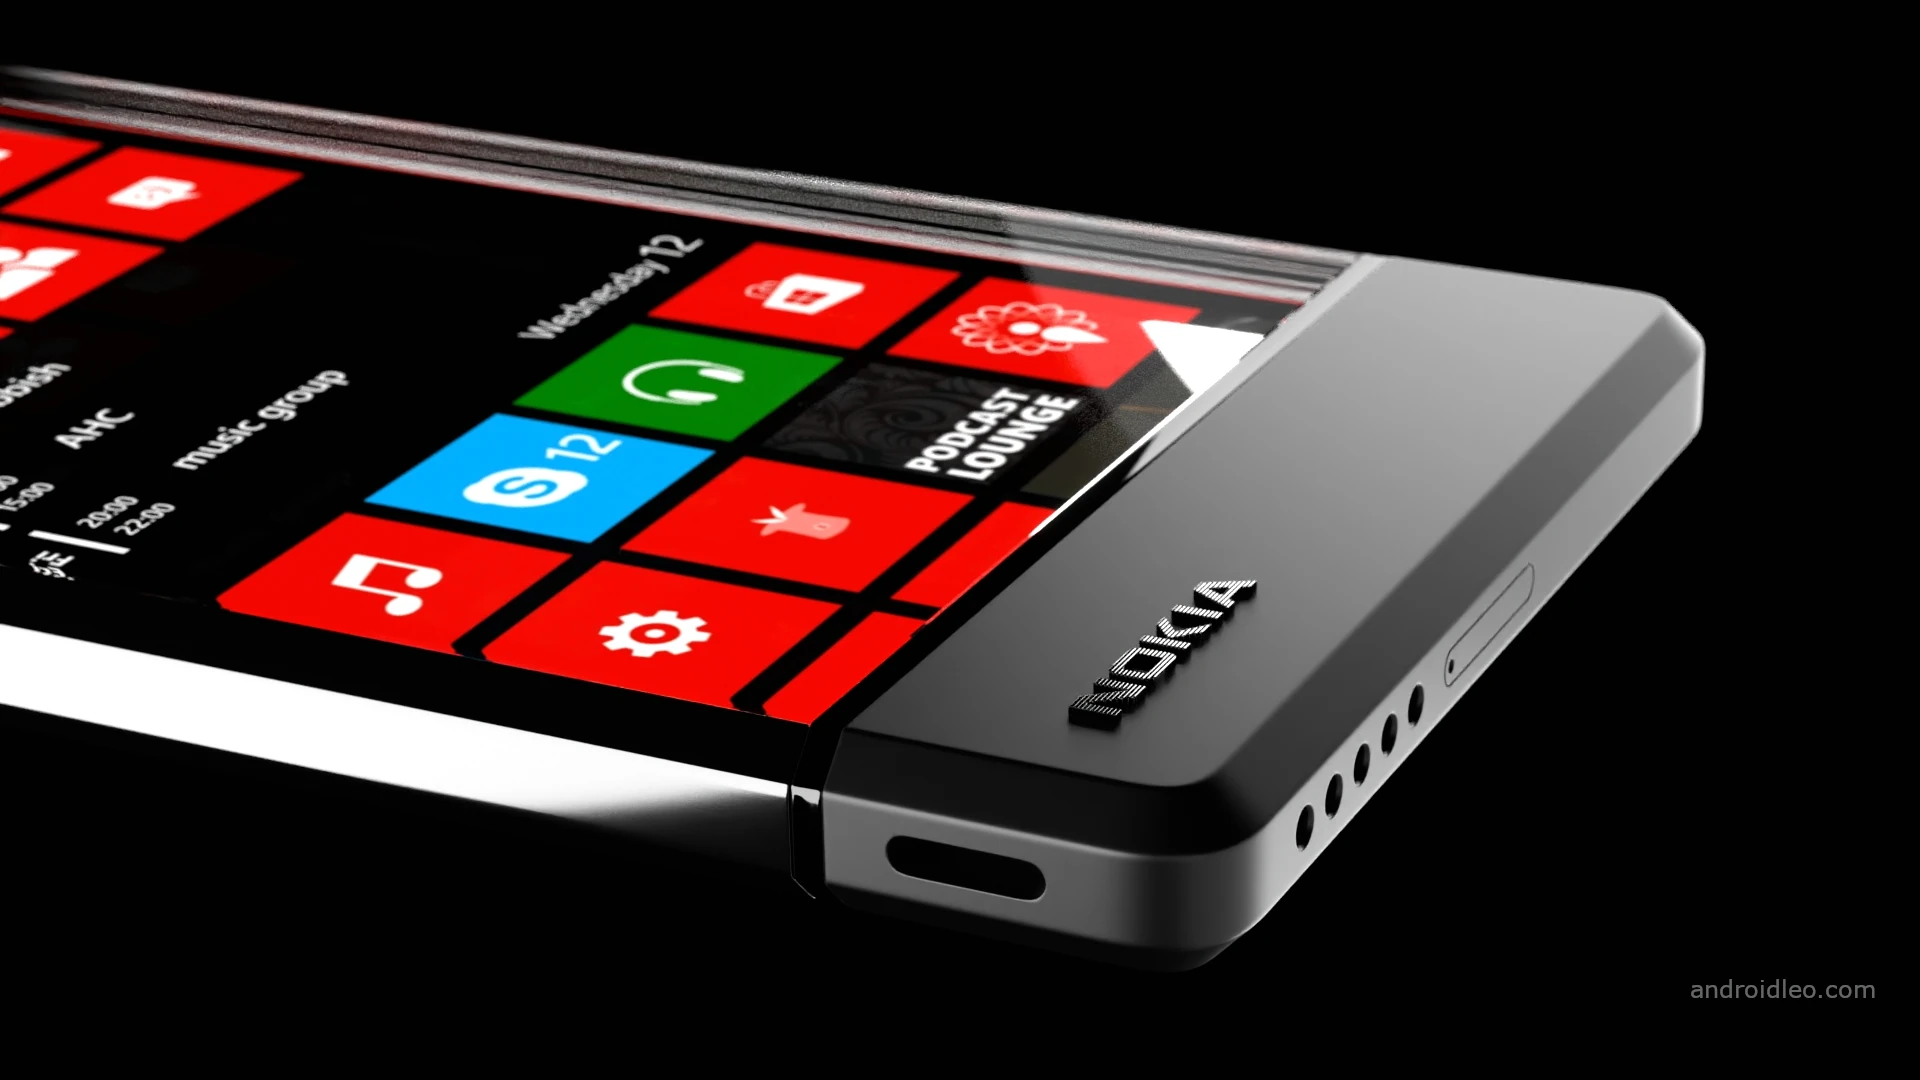 Nokia Transparent Phone - Price, Release Date